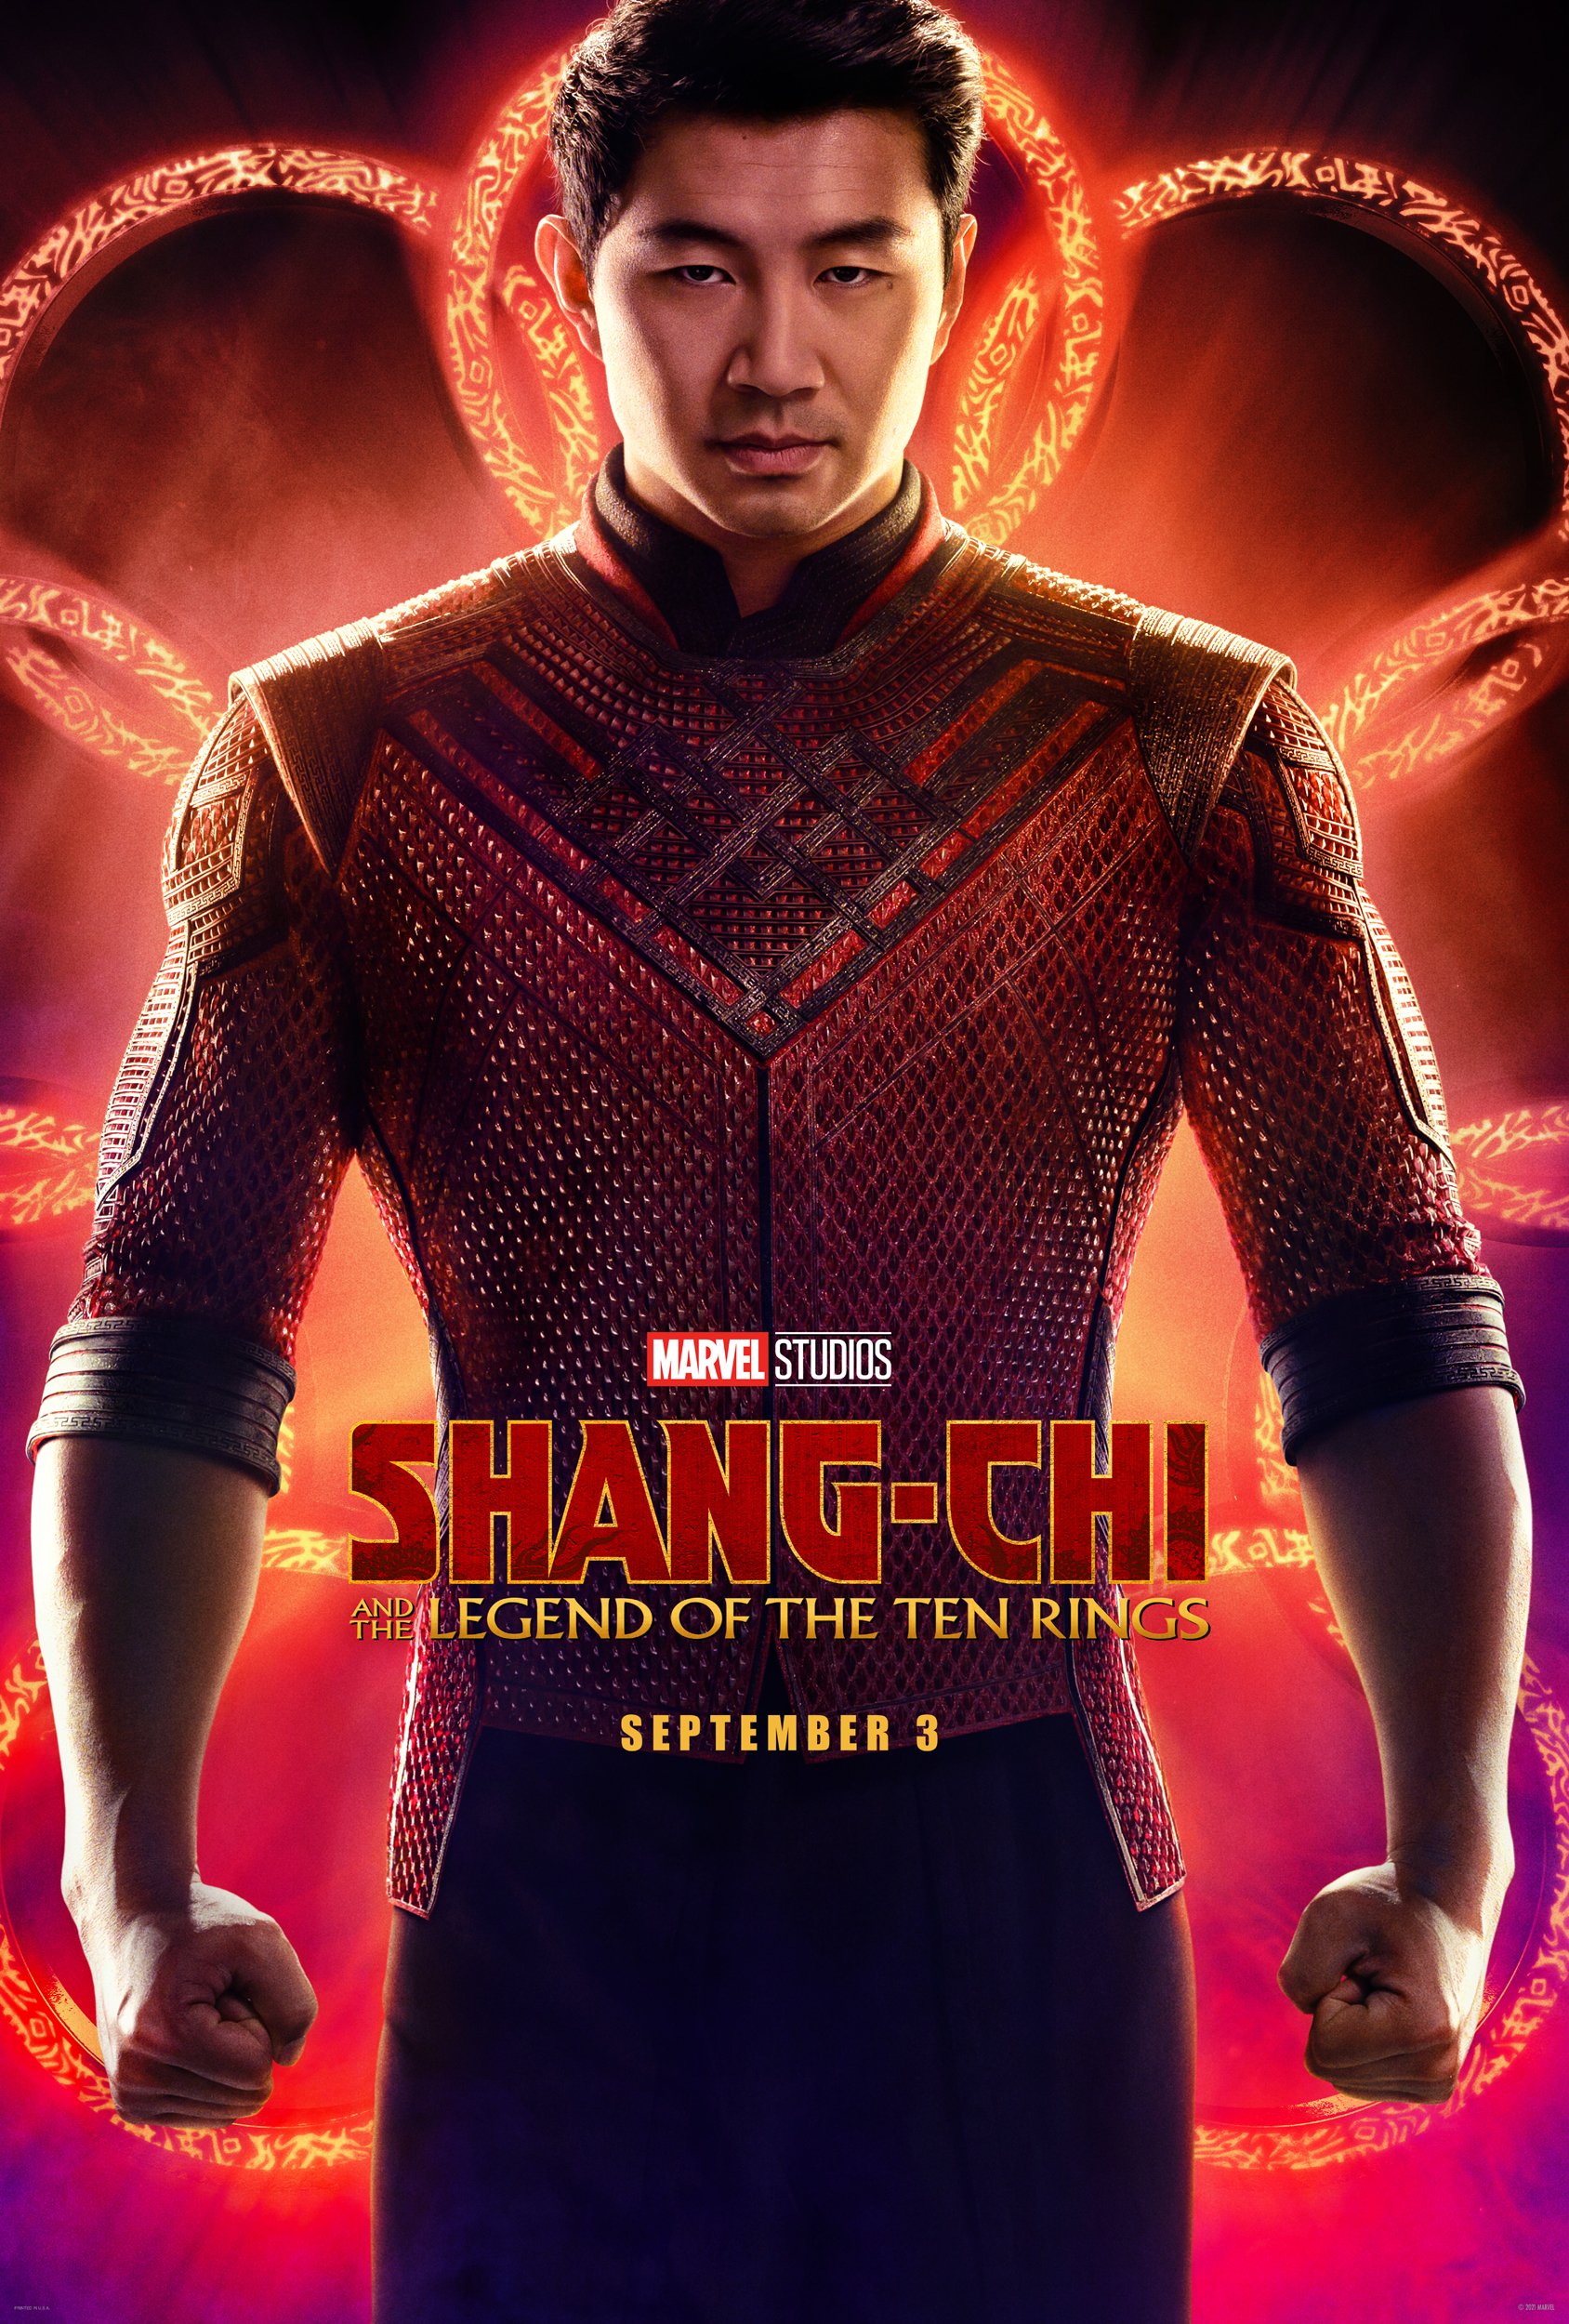 Le trailer de "Shang-Chi and the Legend of the Ten Rings" est là !